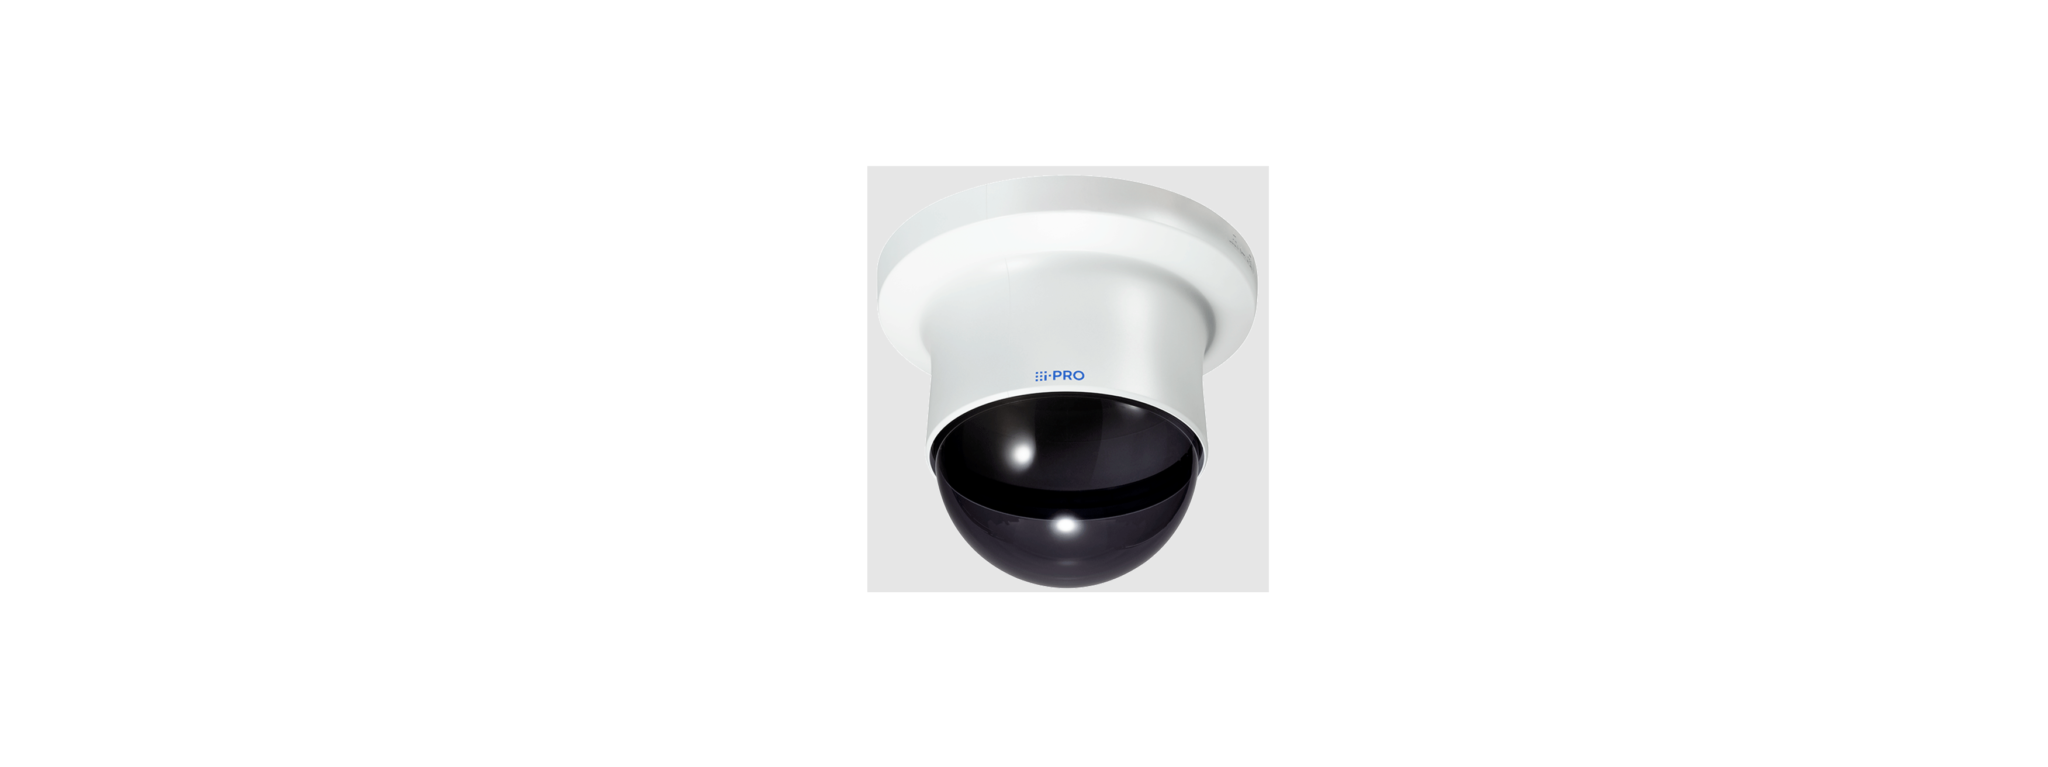 i-PRO WV-QAT100 Inner Cover for Surveillance Camera